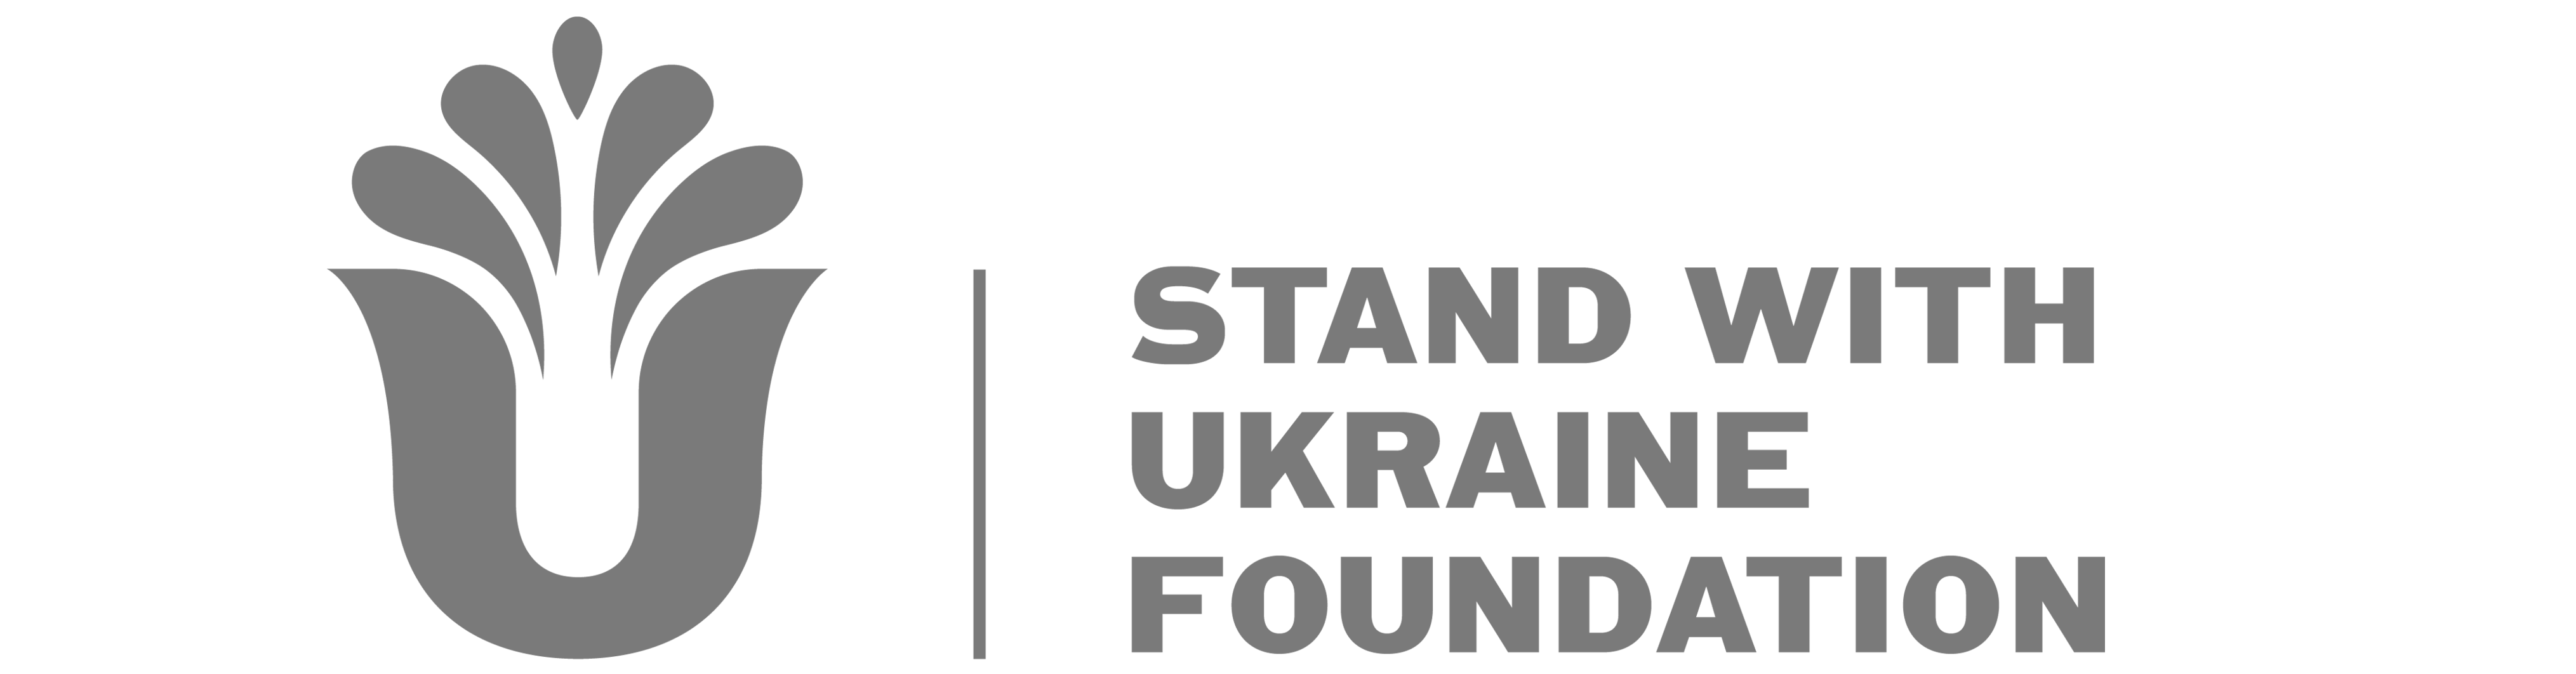 Ukr_fundation